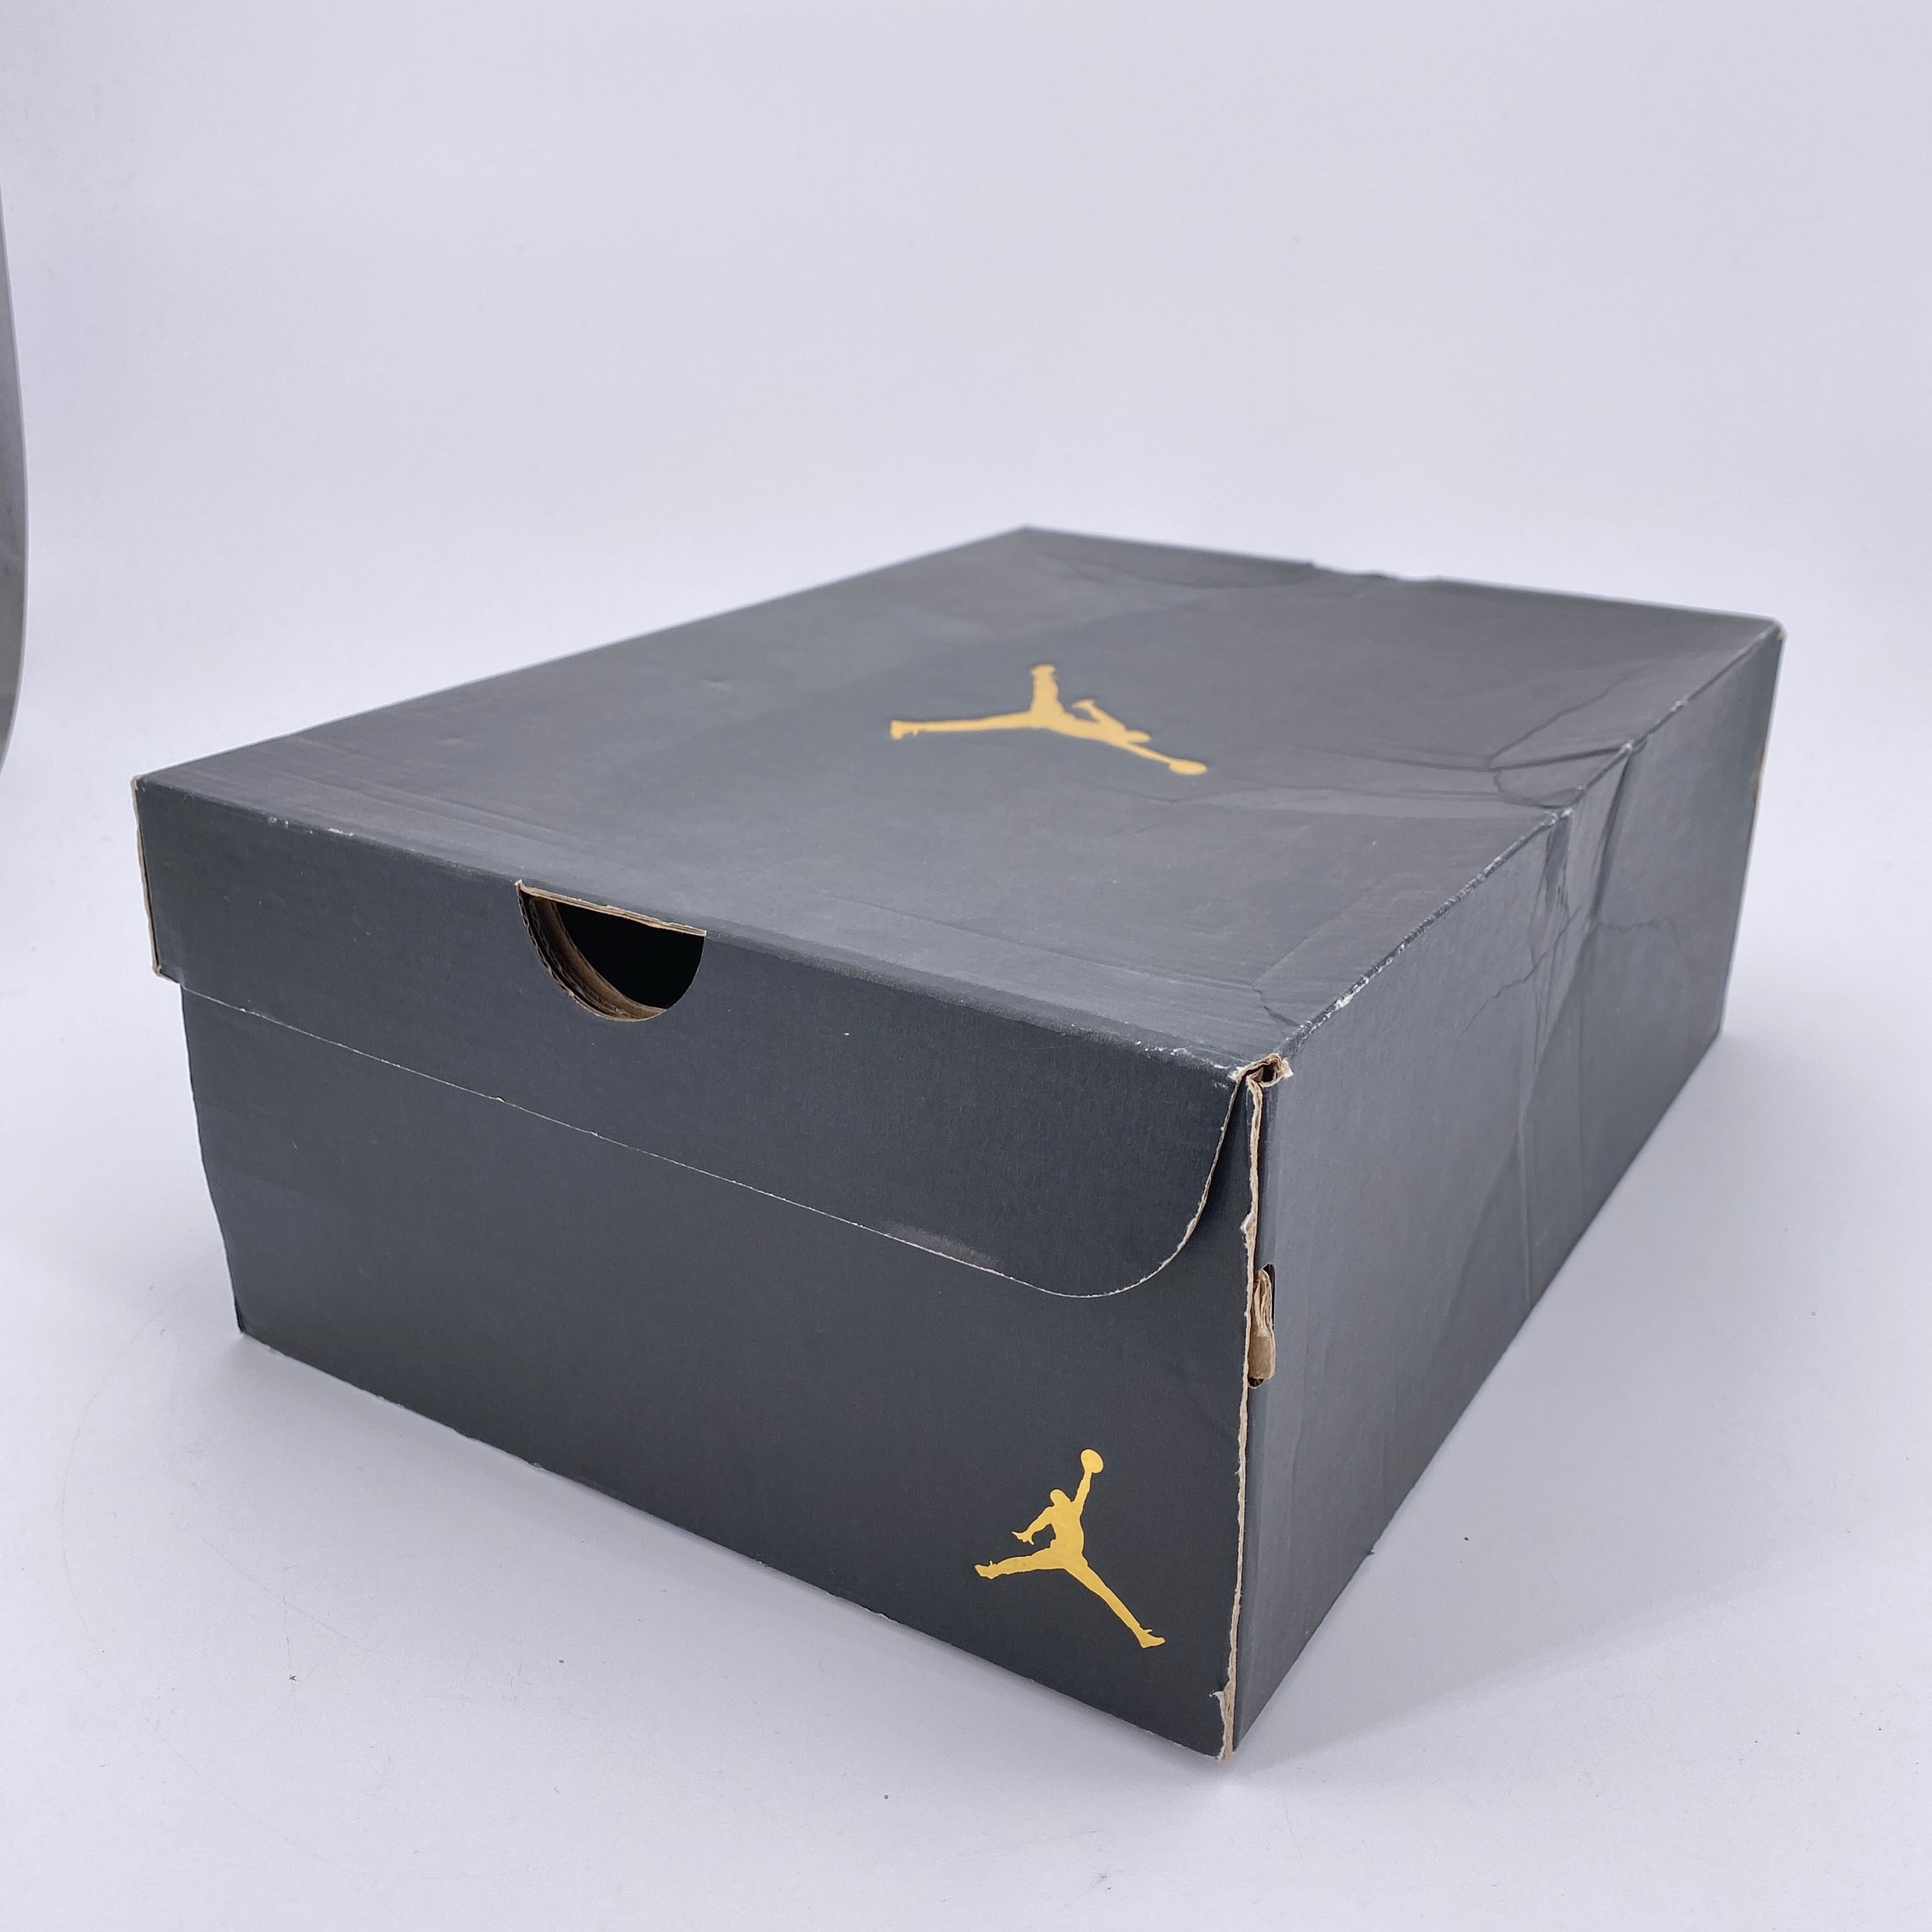 Air Jordan 11 Retro Low "Closing Ceremony" 2016 New Size 9.5